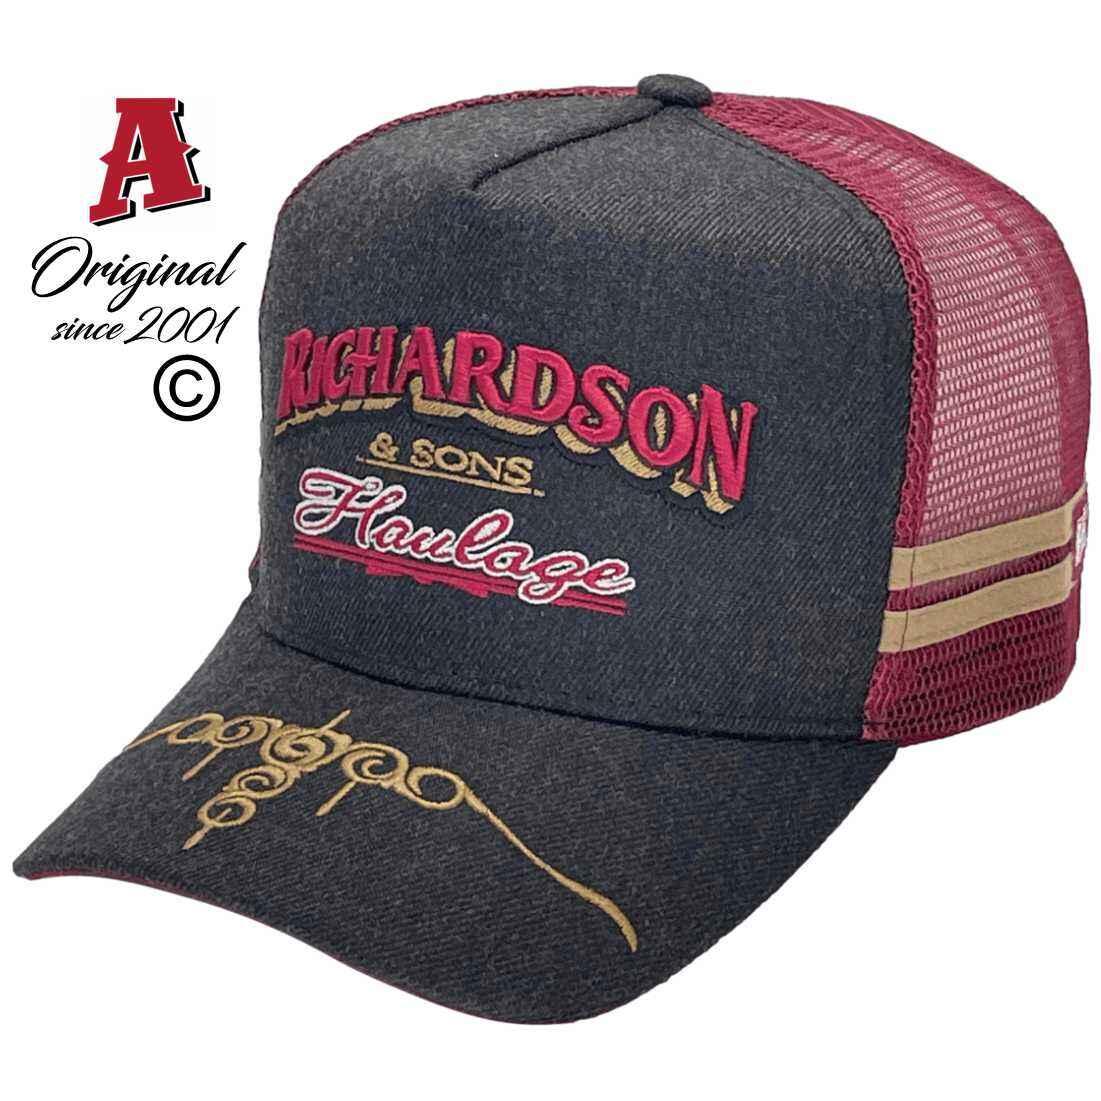 Richardson Sons Haulage Henty NSW Power Aussie Trucker Hats with Double Side Bands Australian HeadFit Crown Charcoal Burgundy Khaki